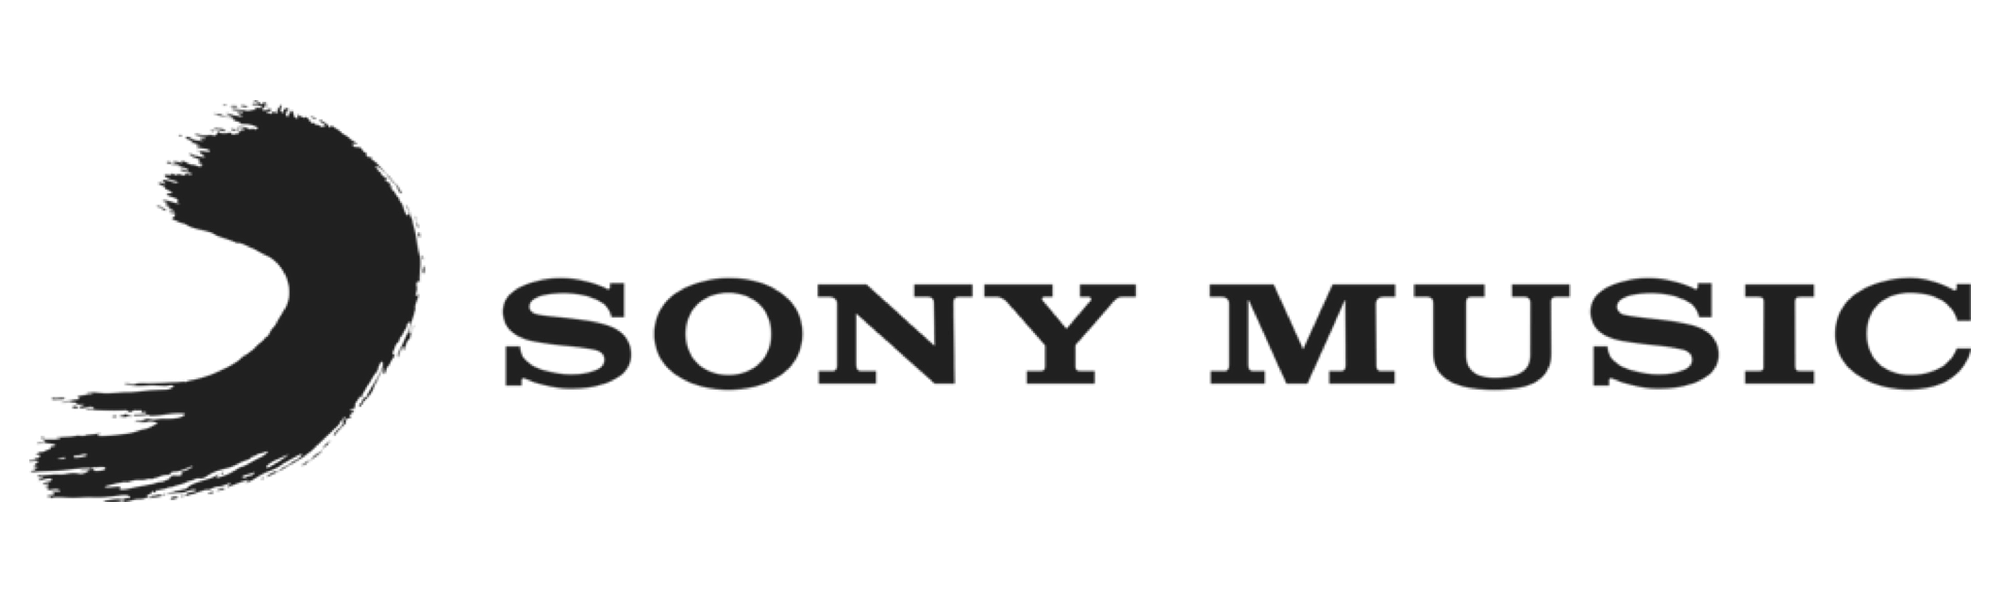 S one music. Sony Music. Логотип Sony Music. Сони Мьюзик Энтертейнмент. Sony Music Russia.